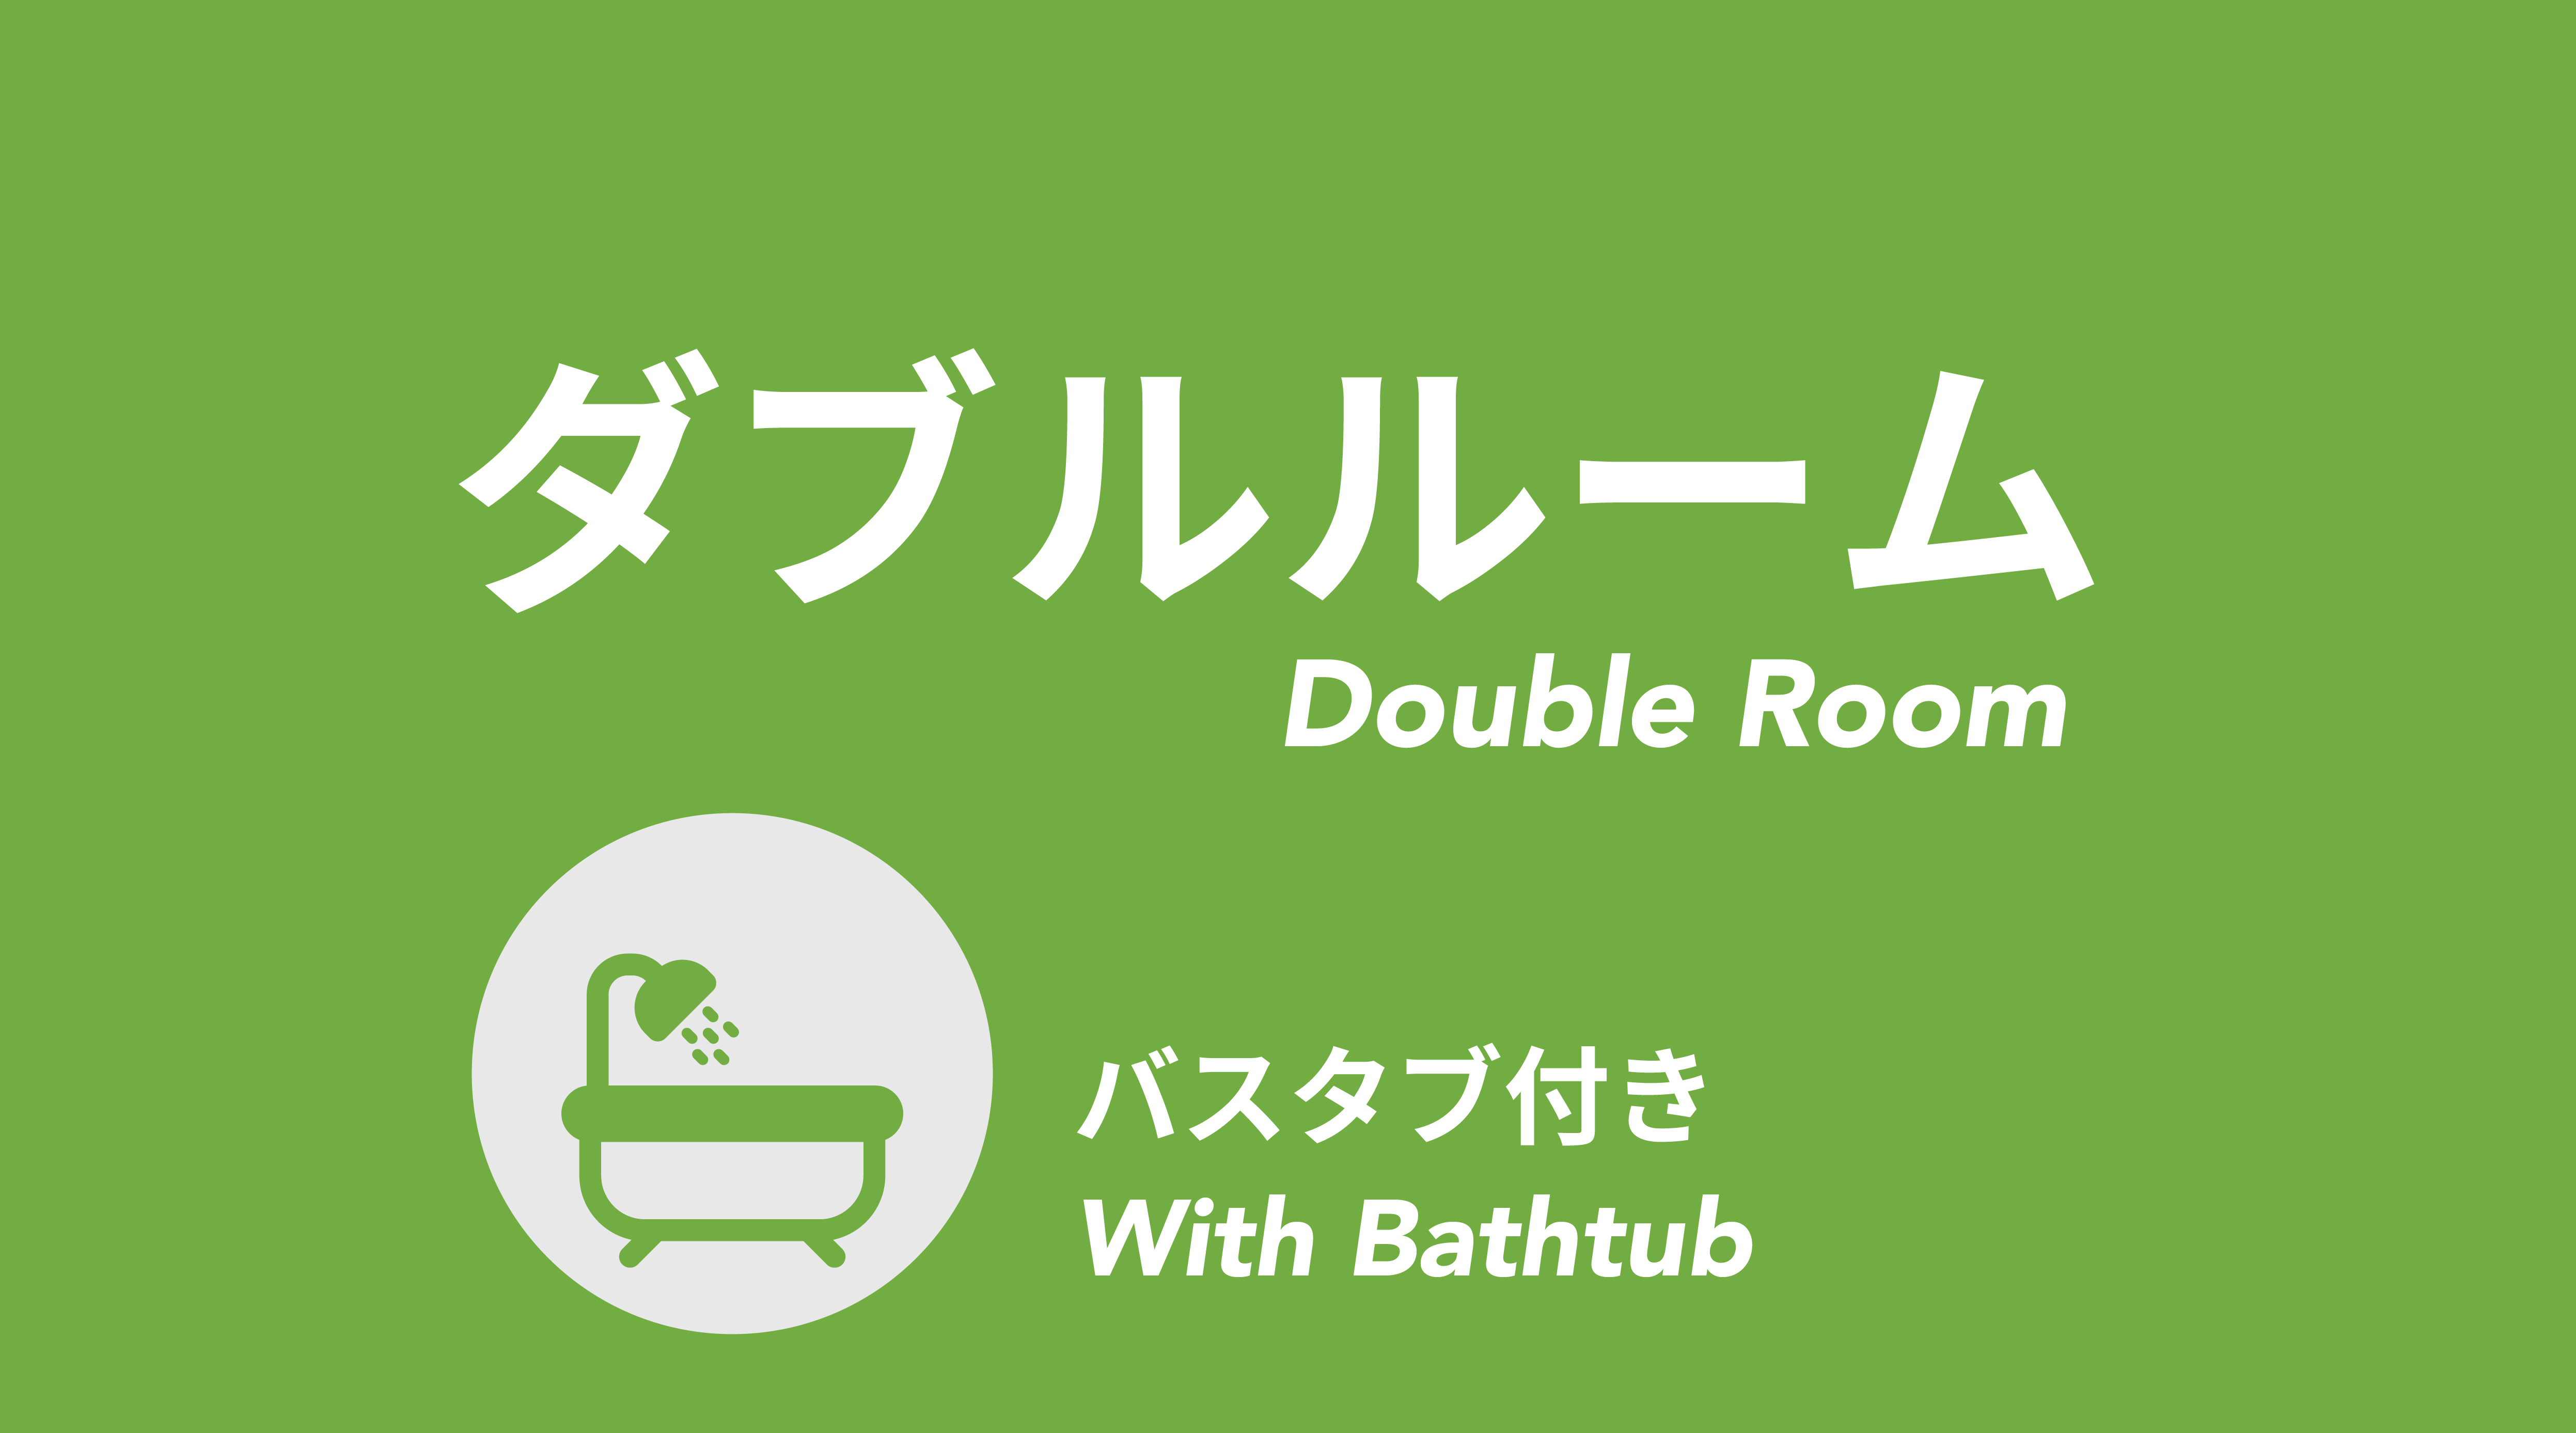 Double Room with Bathtub